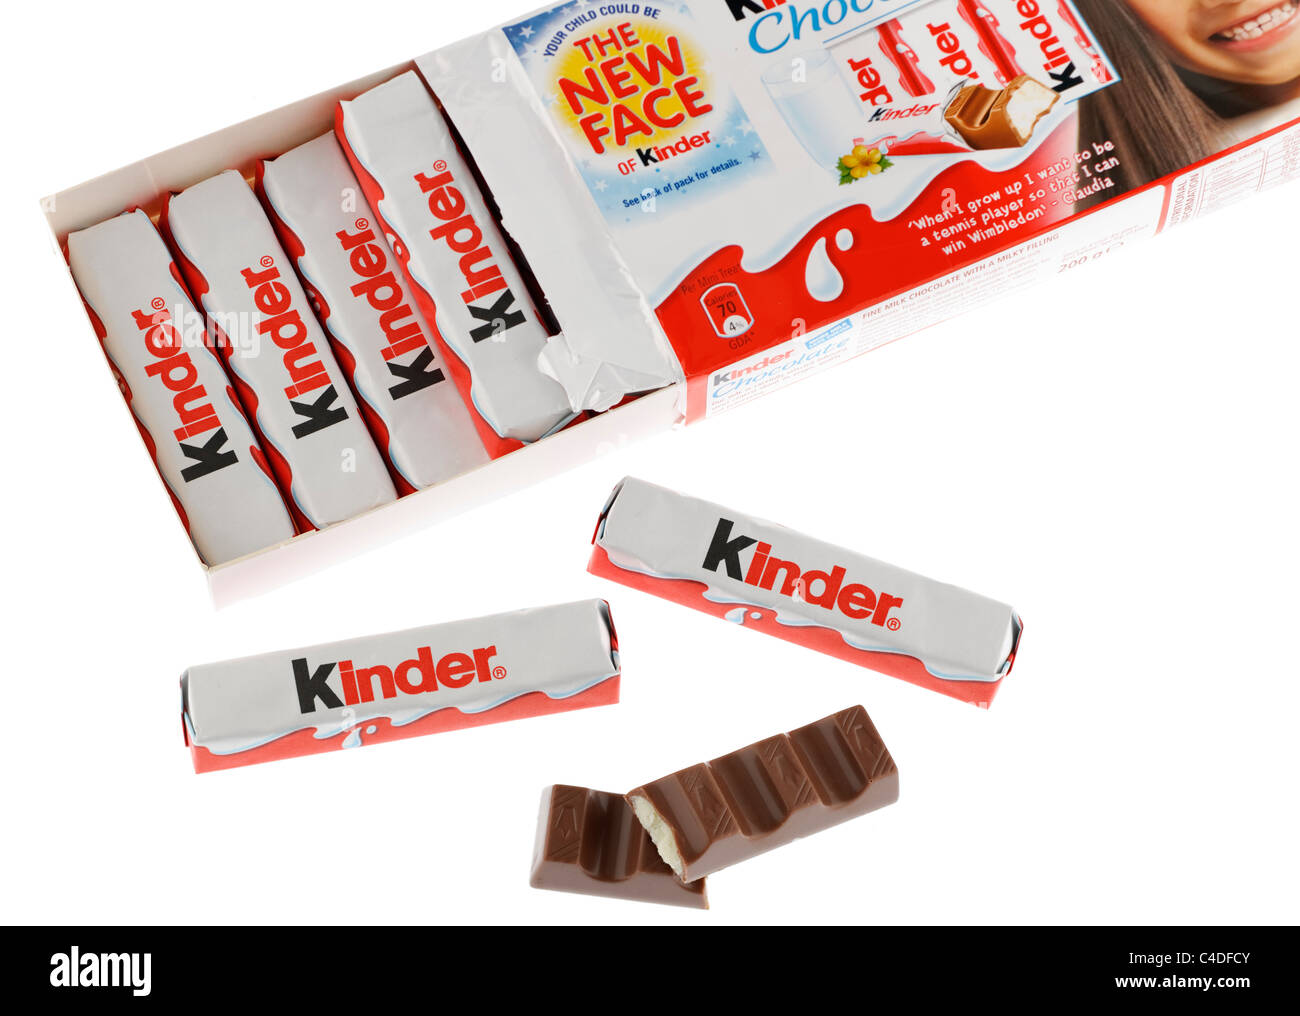 Pack of 16 Kinder mini treats chocolate covered bars Stock Photo